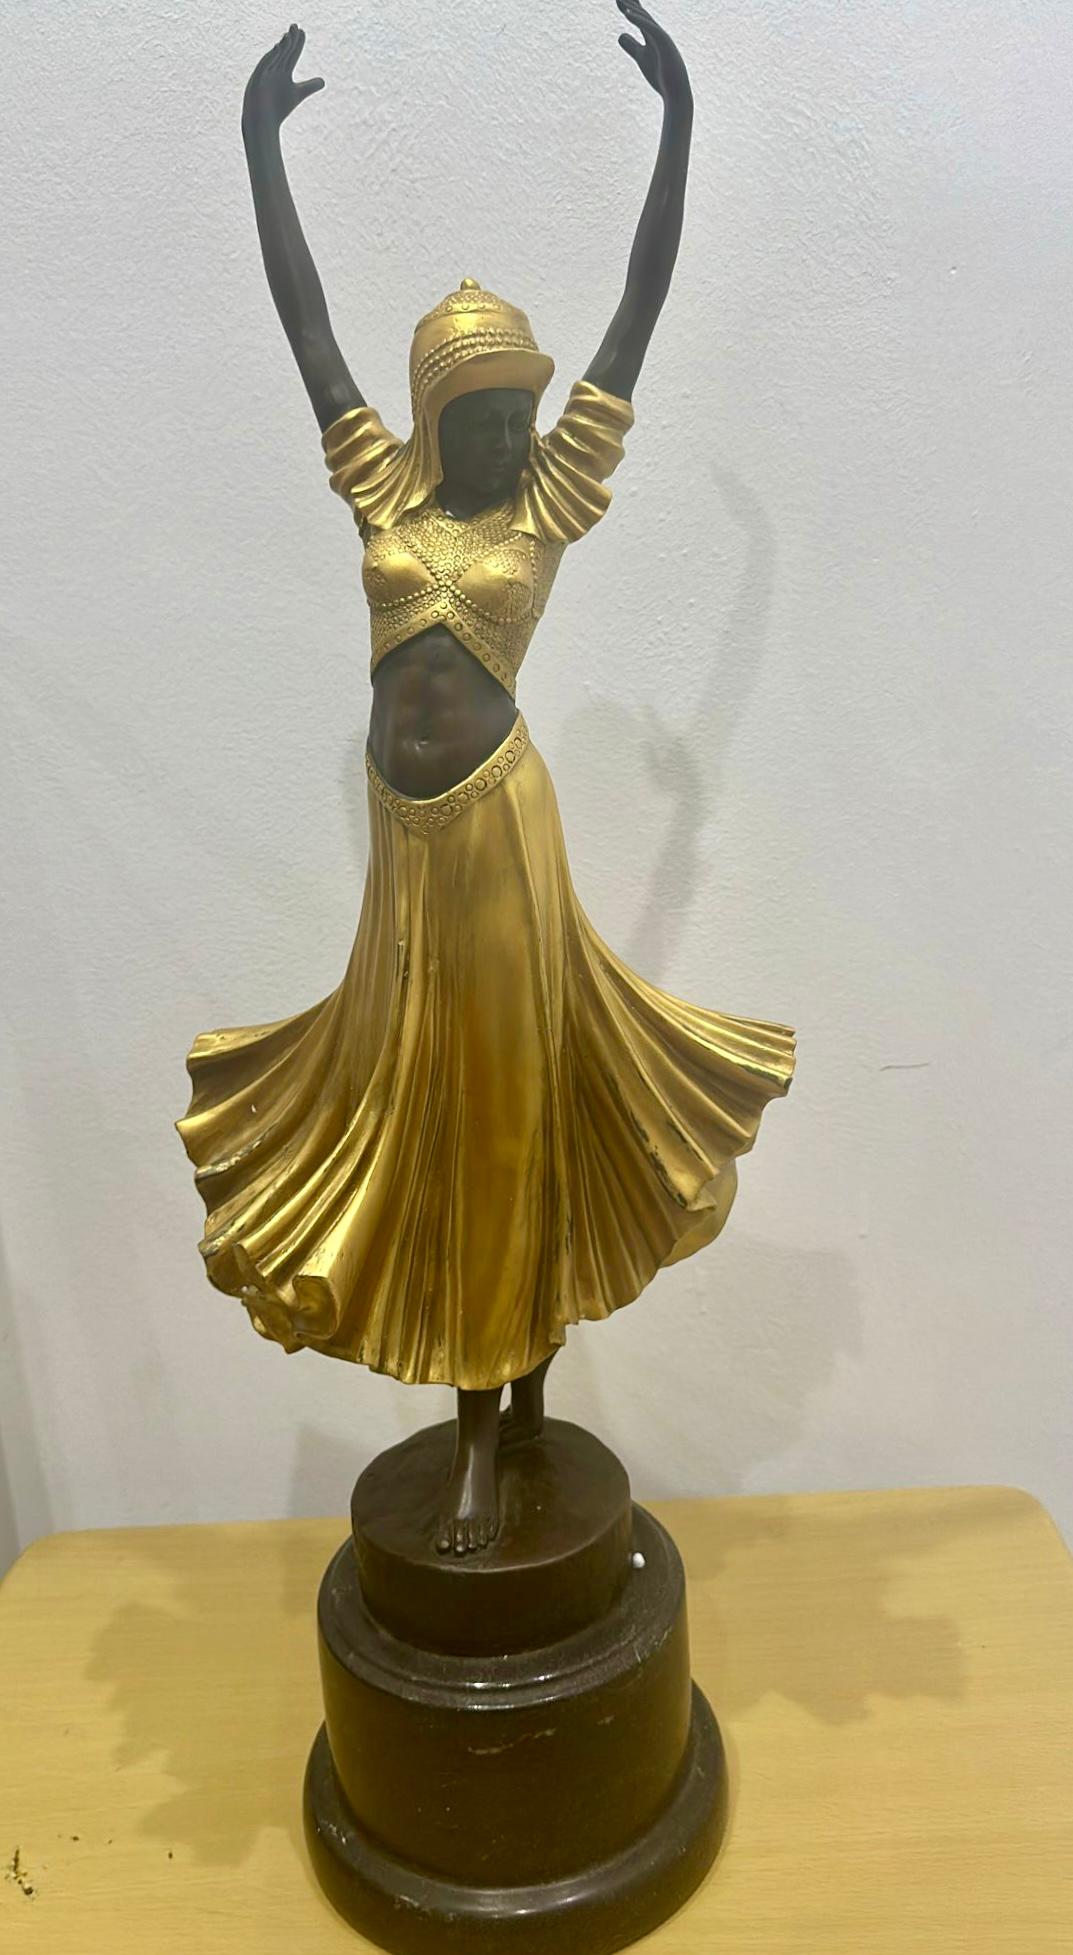 Tänzerin von Demétre Chiparus 1886 - 1947
Große chrysoelephantine Skulptur in vergoldeter Bronze Marmorsockel.
Signiert 